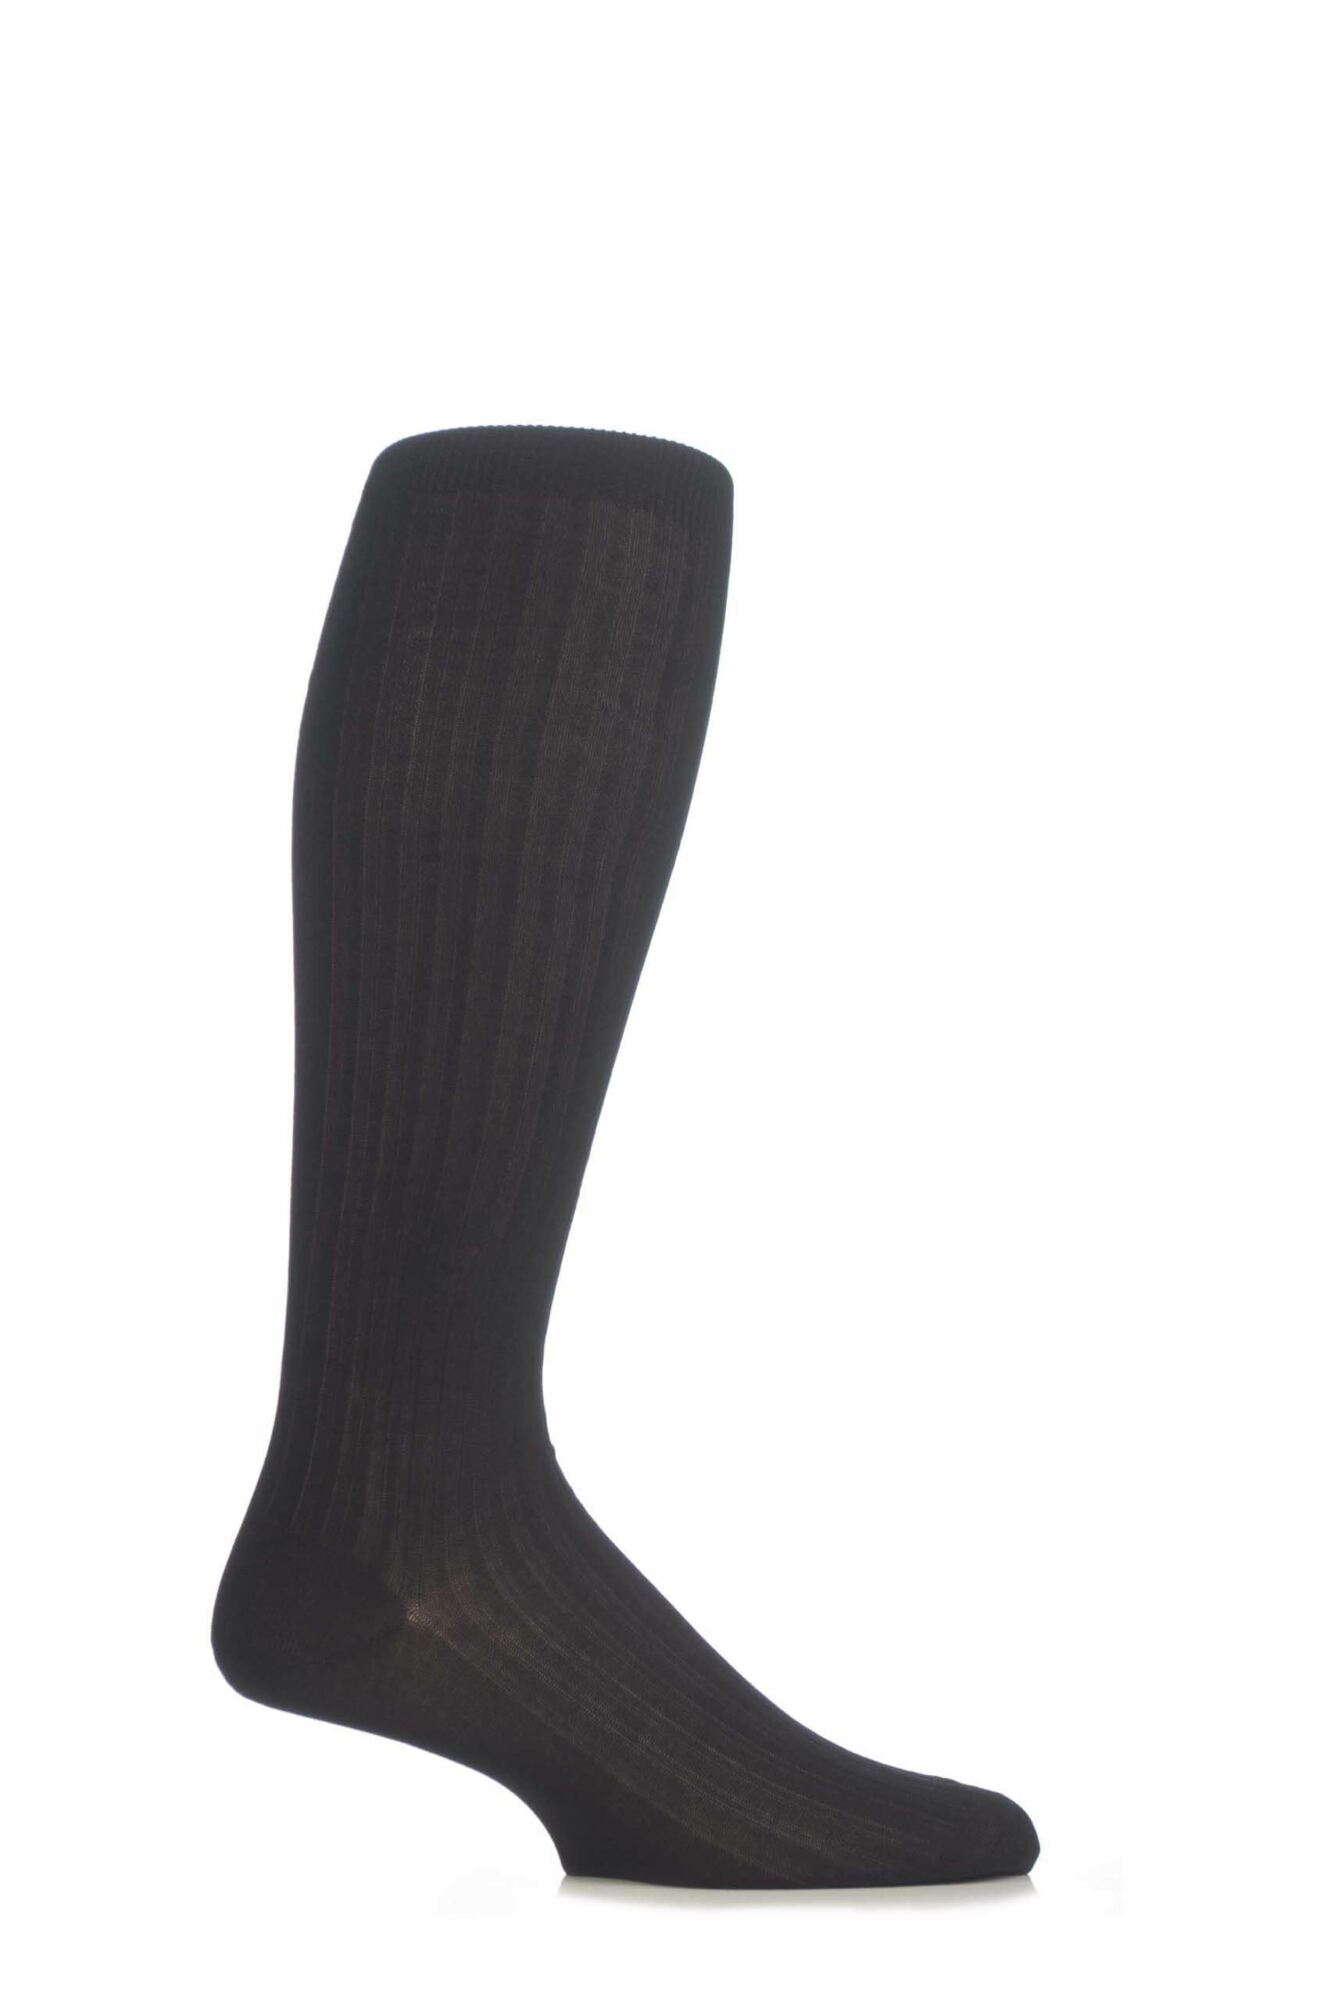 Mens 1 Pair Pantherella Merino Wool Rib Knee High Socks